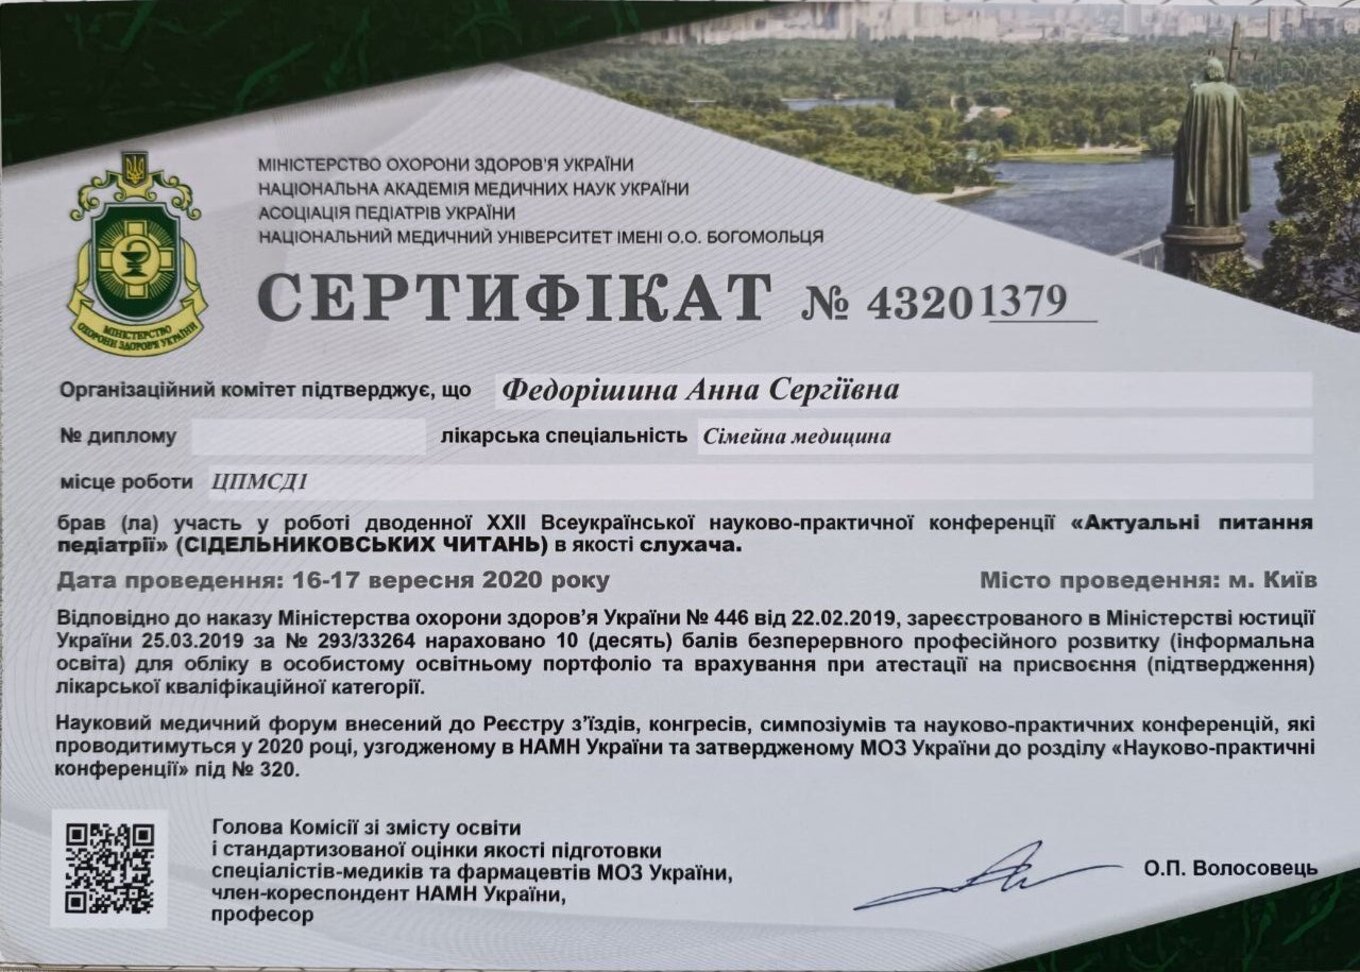 Fedorishina Anna Sergiyivna sertifikat17